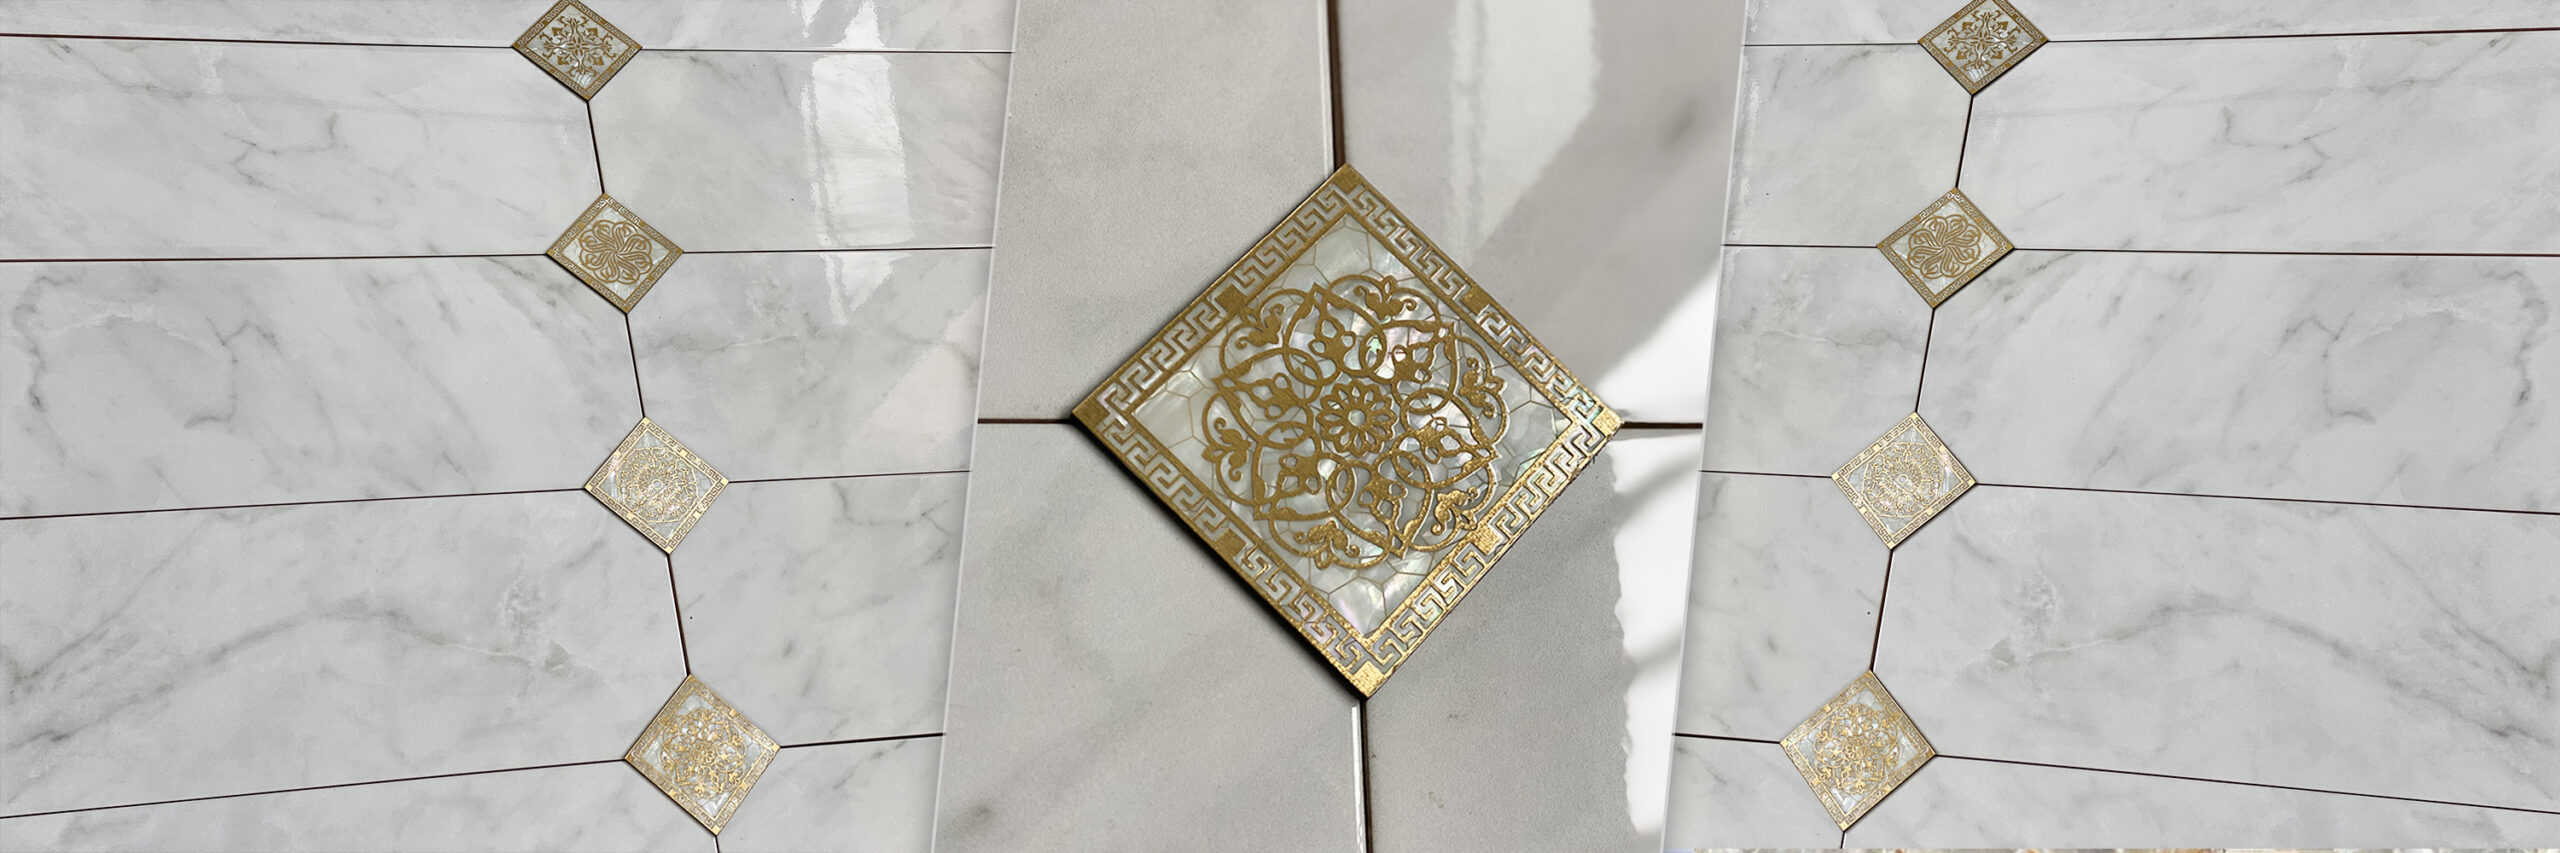 Luxury design tile fbinnotech luxury mosaic mother of pearl tiles